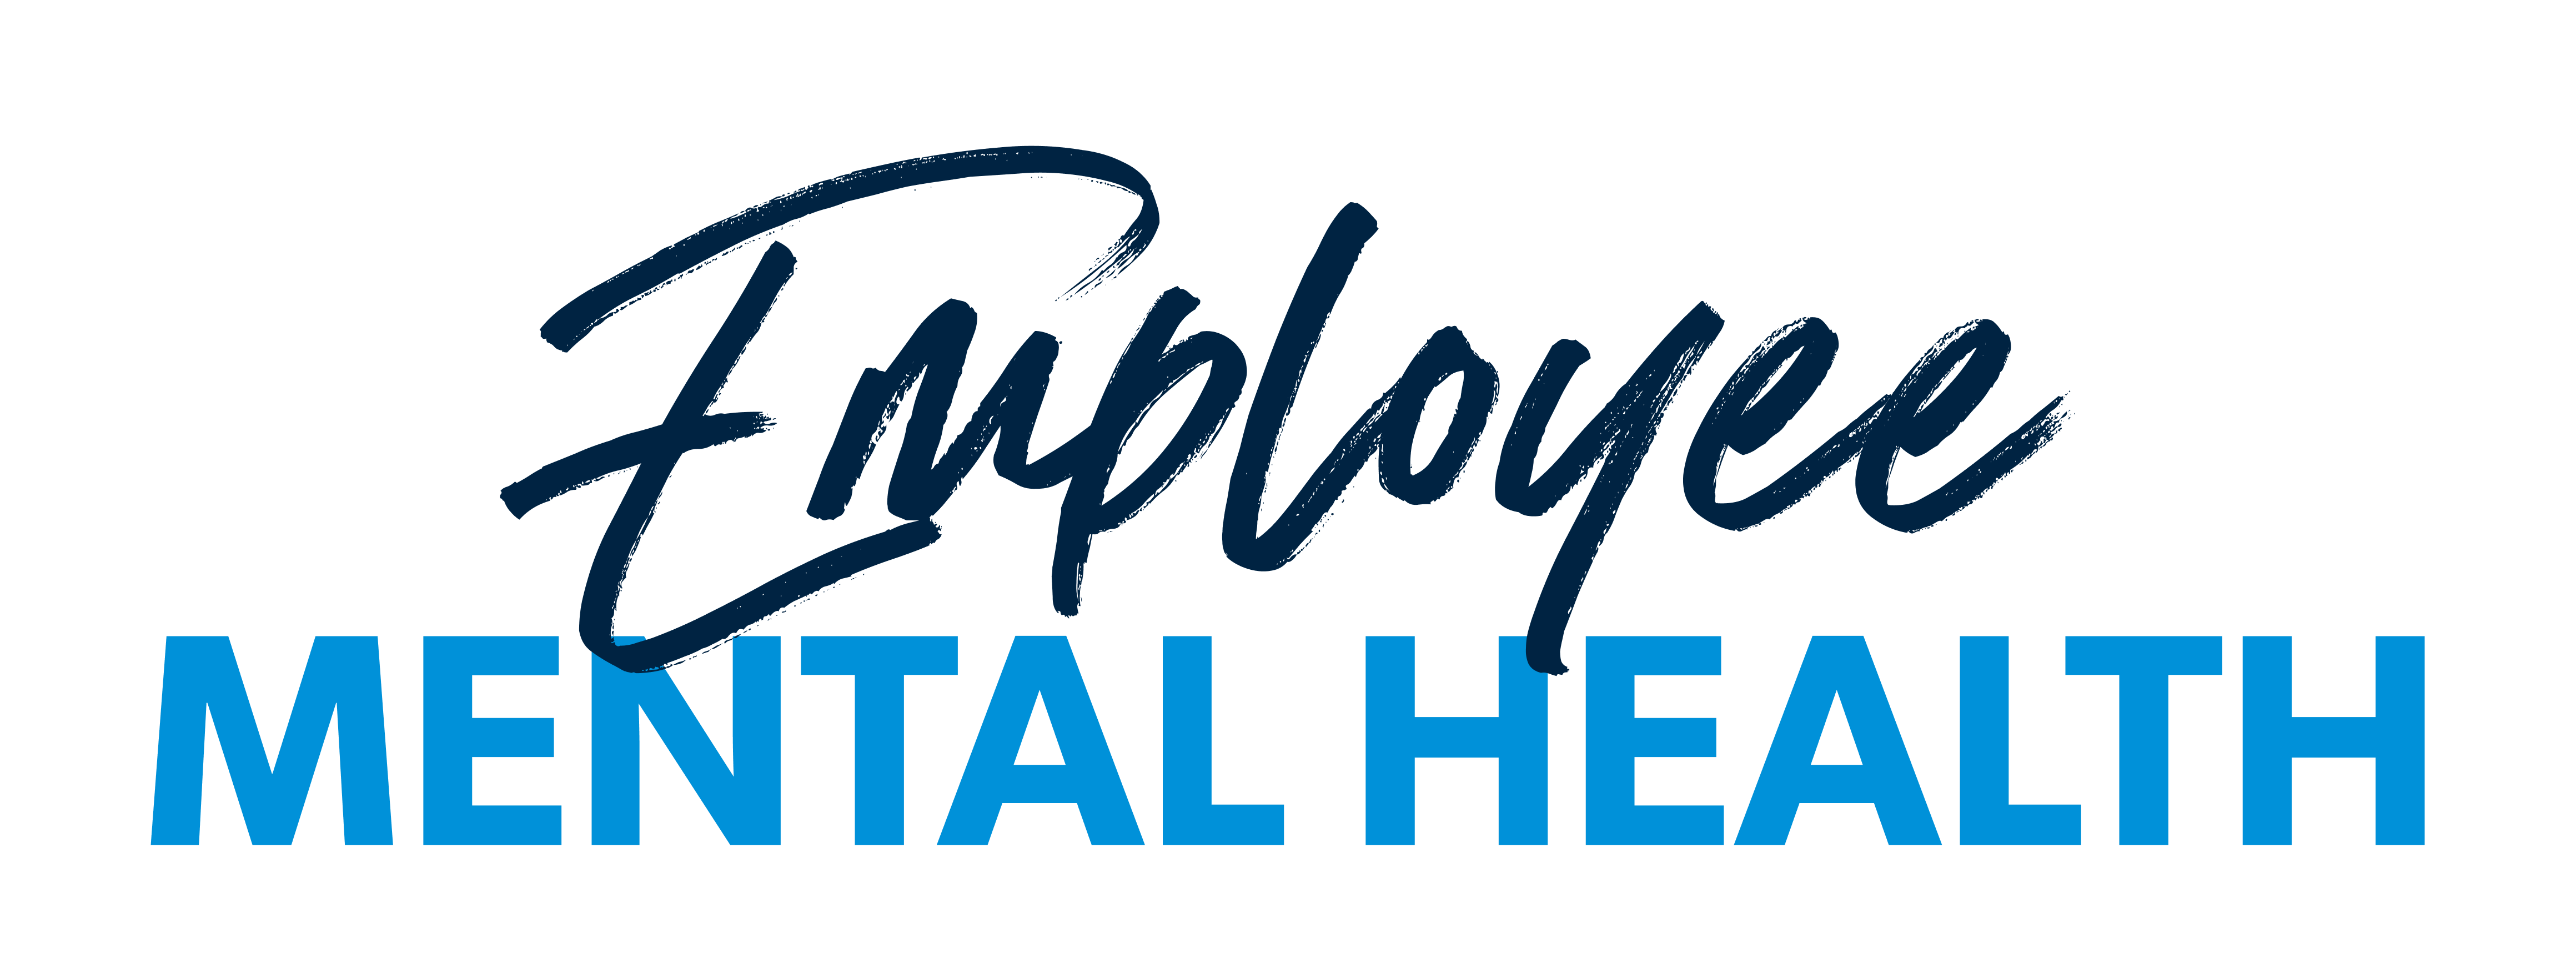 Employee Mental Health